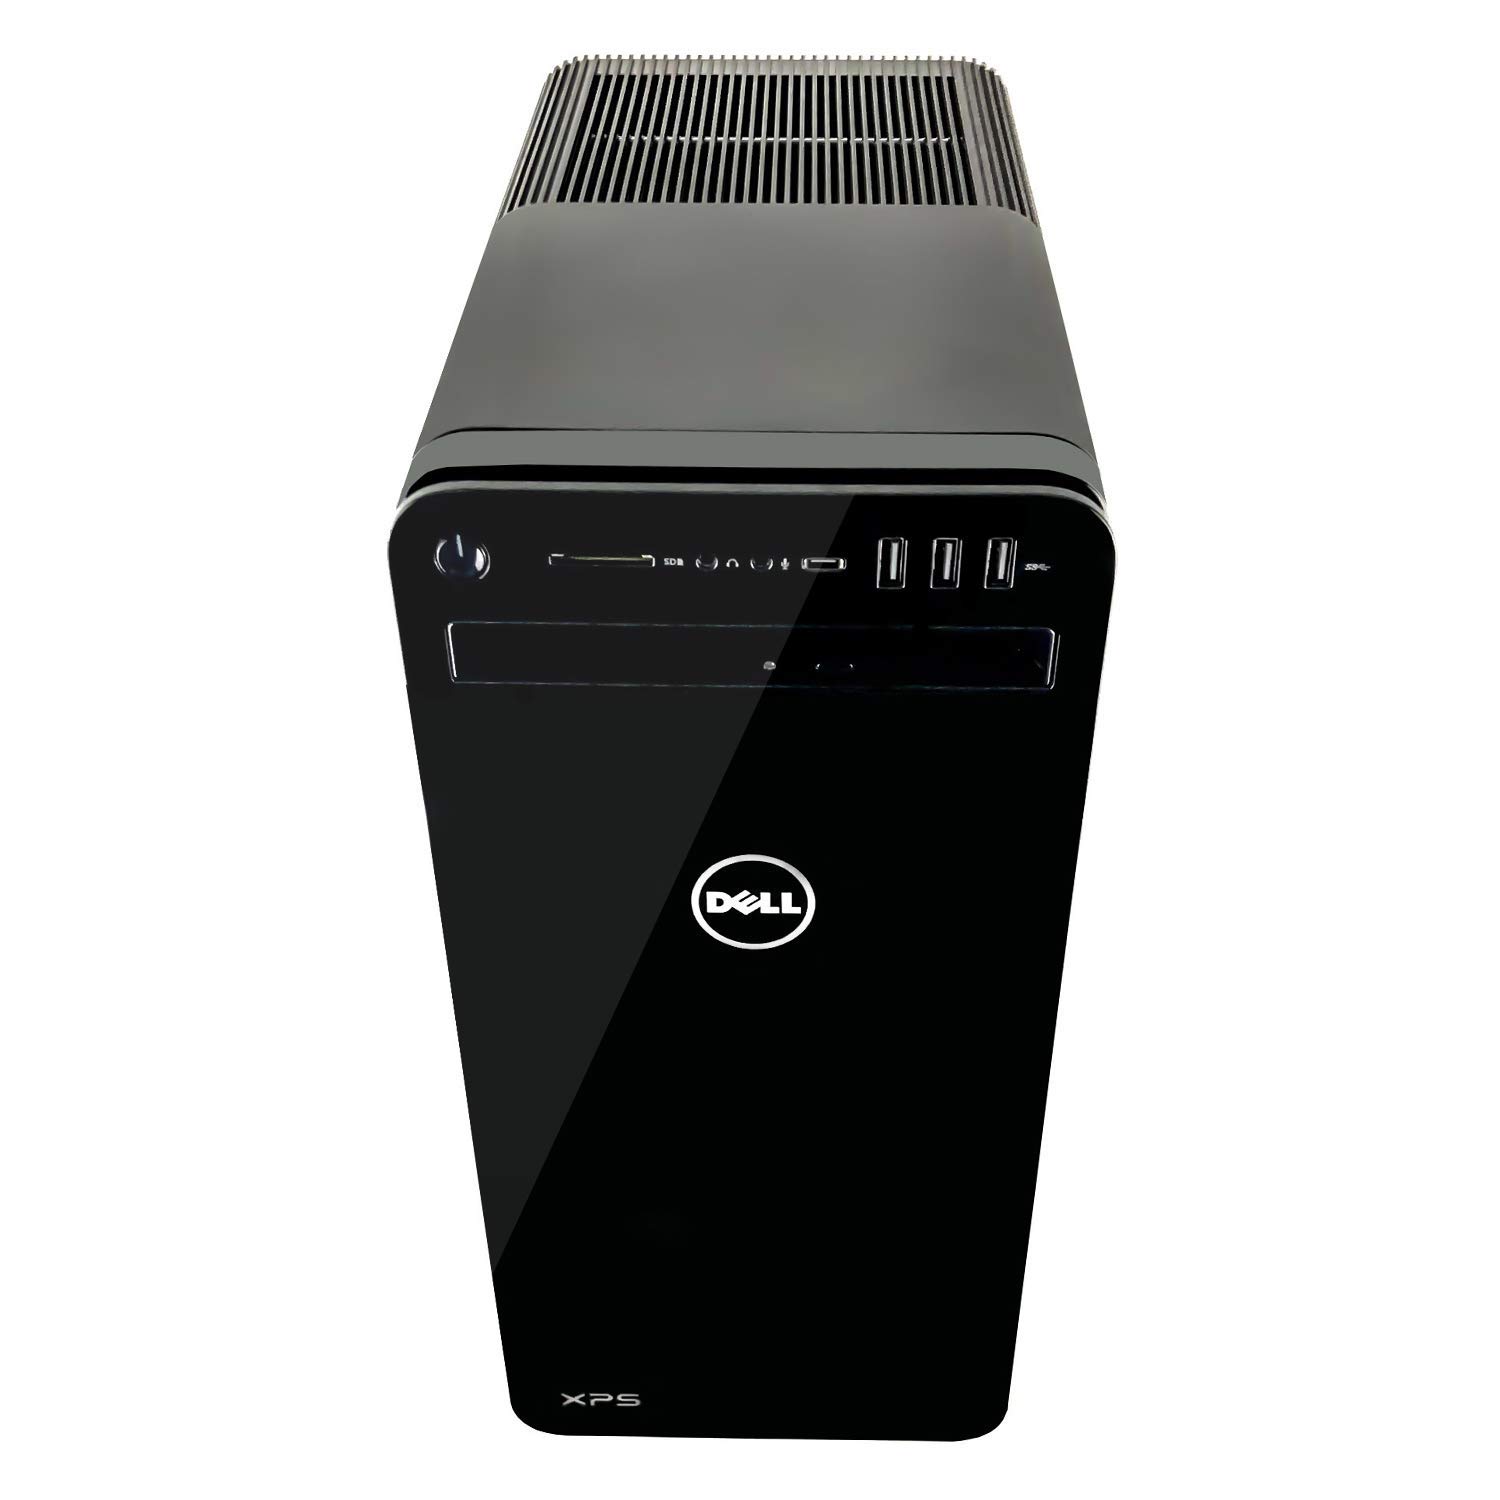 Dell XPS 8930 Tower Desktop - 8th Gen. Intel Core i7-8700 6-Core up to 4.60 GHz, 16GB DDR4 Memory, 256GB SSD + 2TB SATA Hard Drive, 8GB Nvidia GeForce GTX 1070, Windows 10, Black (Renewed)